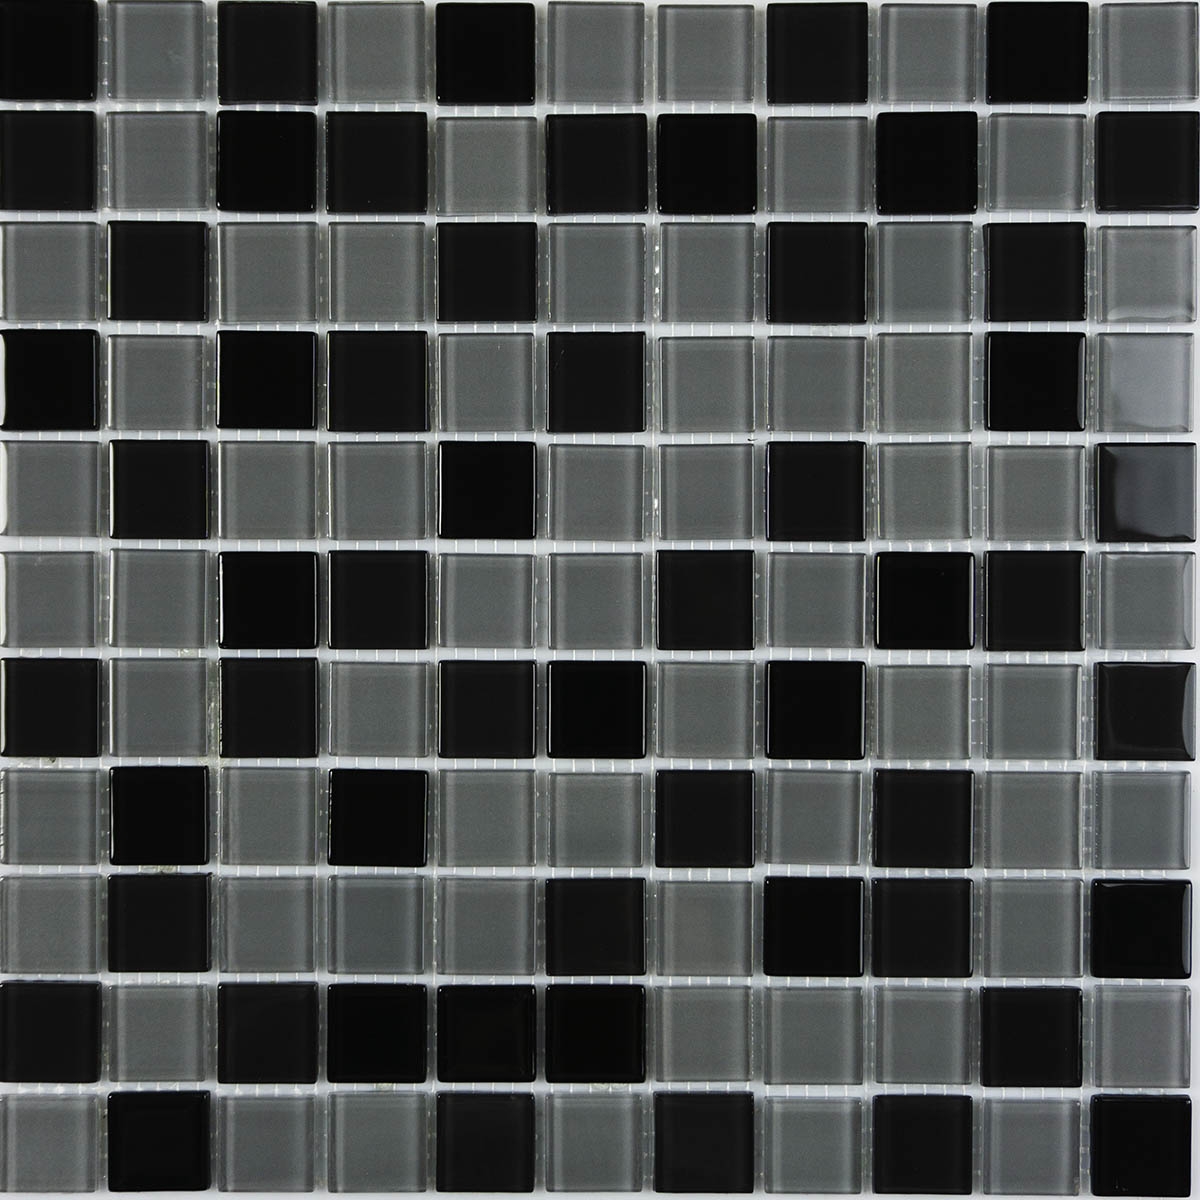 Мозаика GM 4008 C3 black/gray m/gray w 30х30 000008667  color Серый